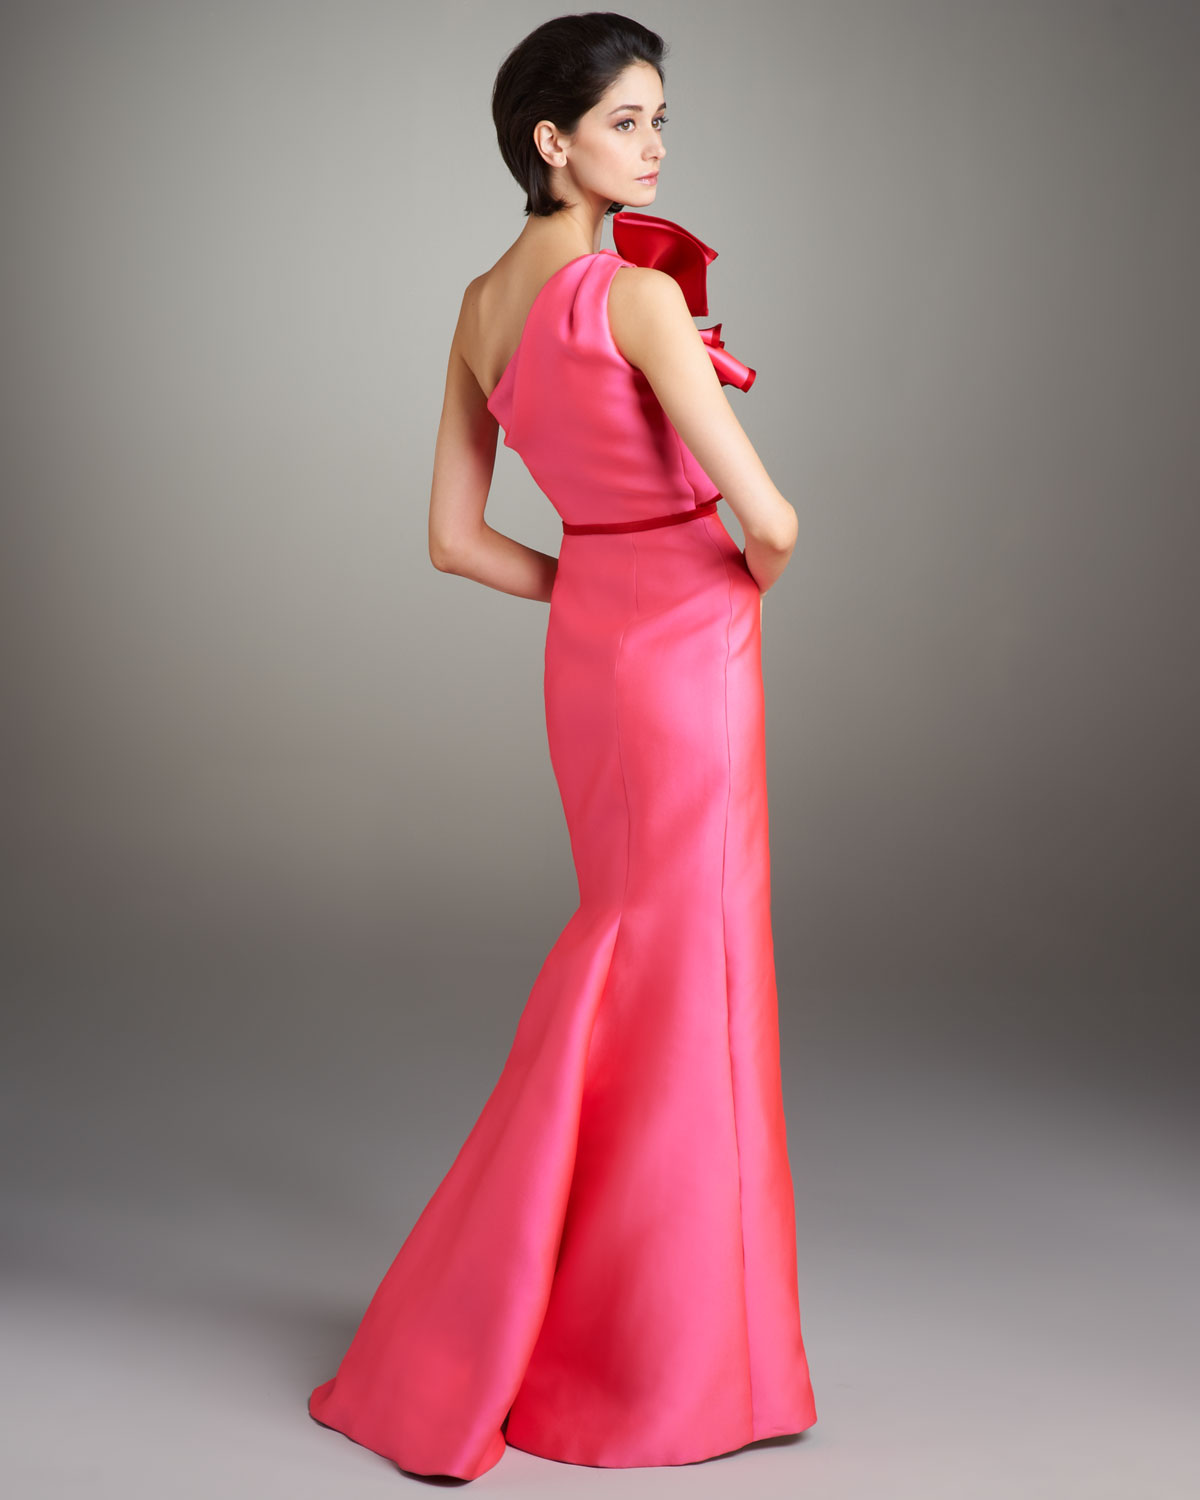 Lyst - Carolina Herrera Contrast Bow-shoulder Gown in Pink